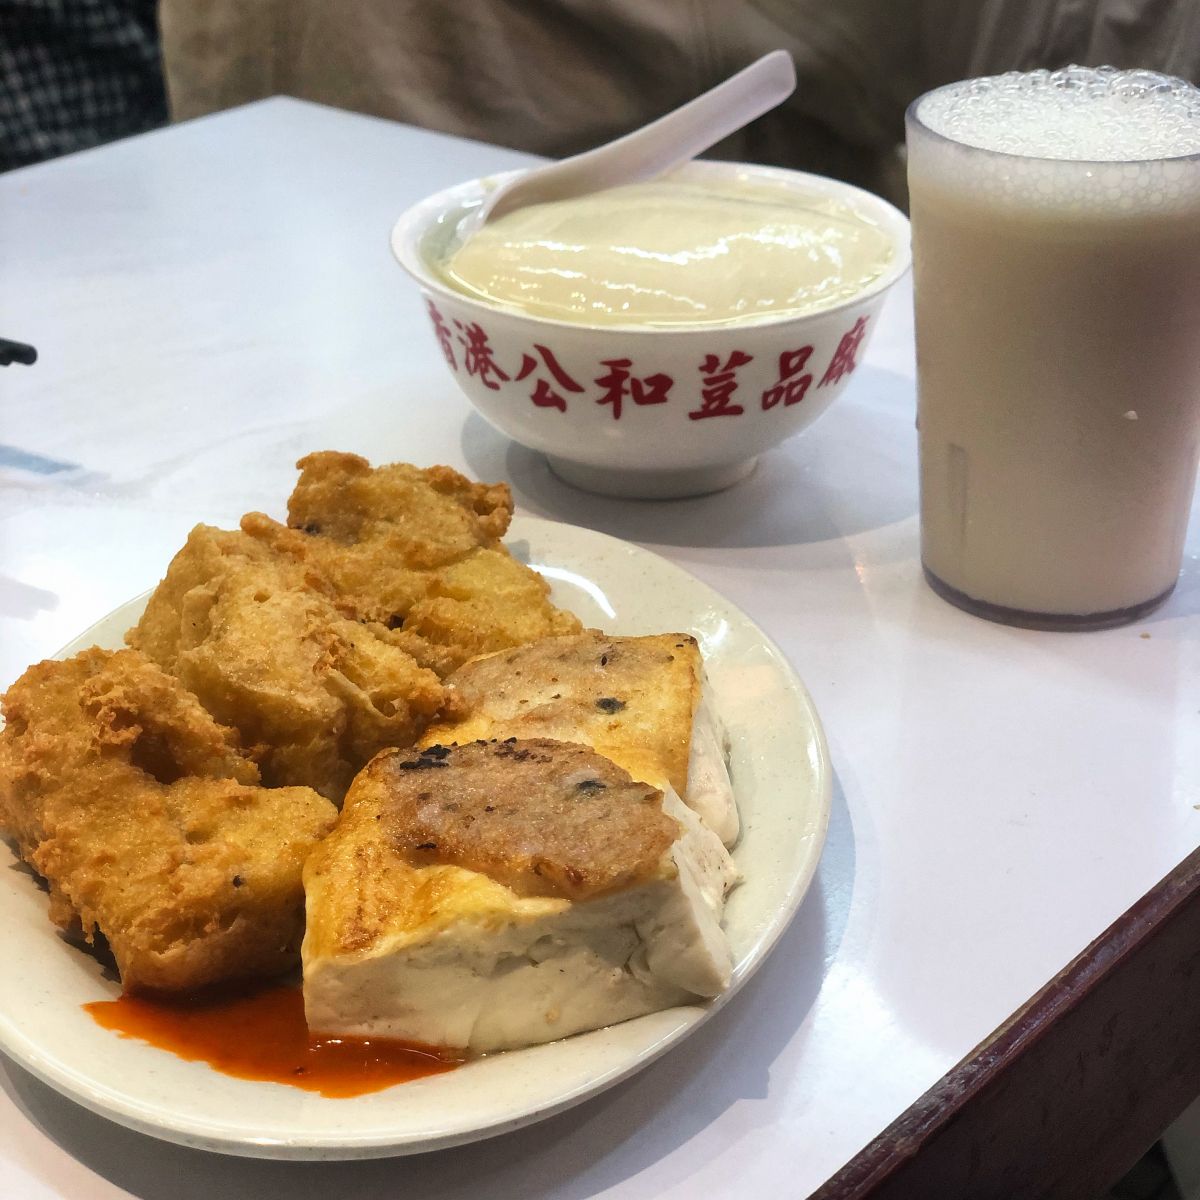 The trio at Kung Wo - Stuffed Tofu, Soy Milk, and Tofu Pudding